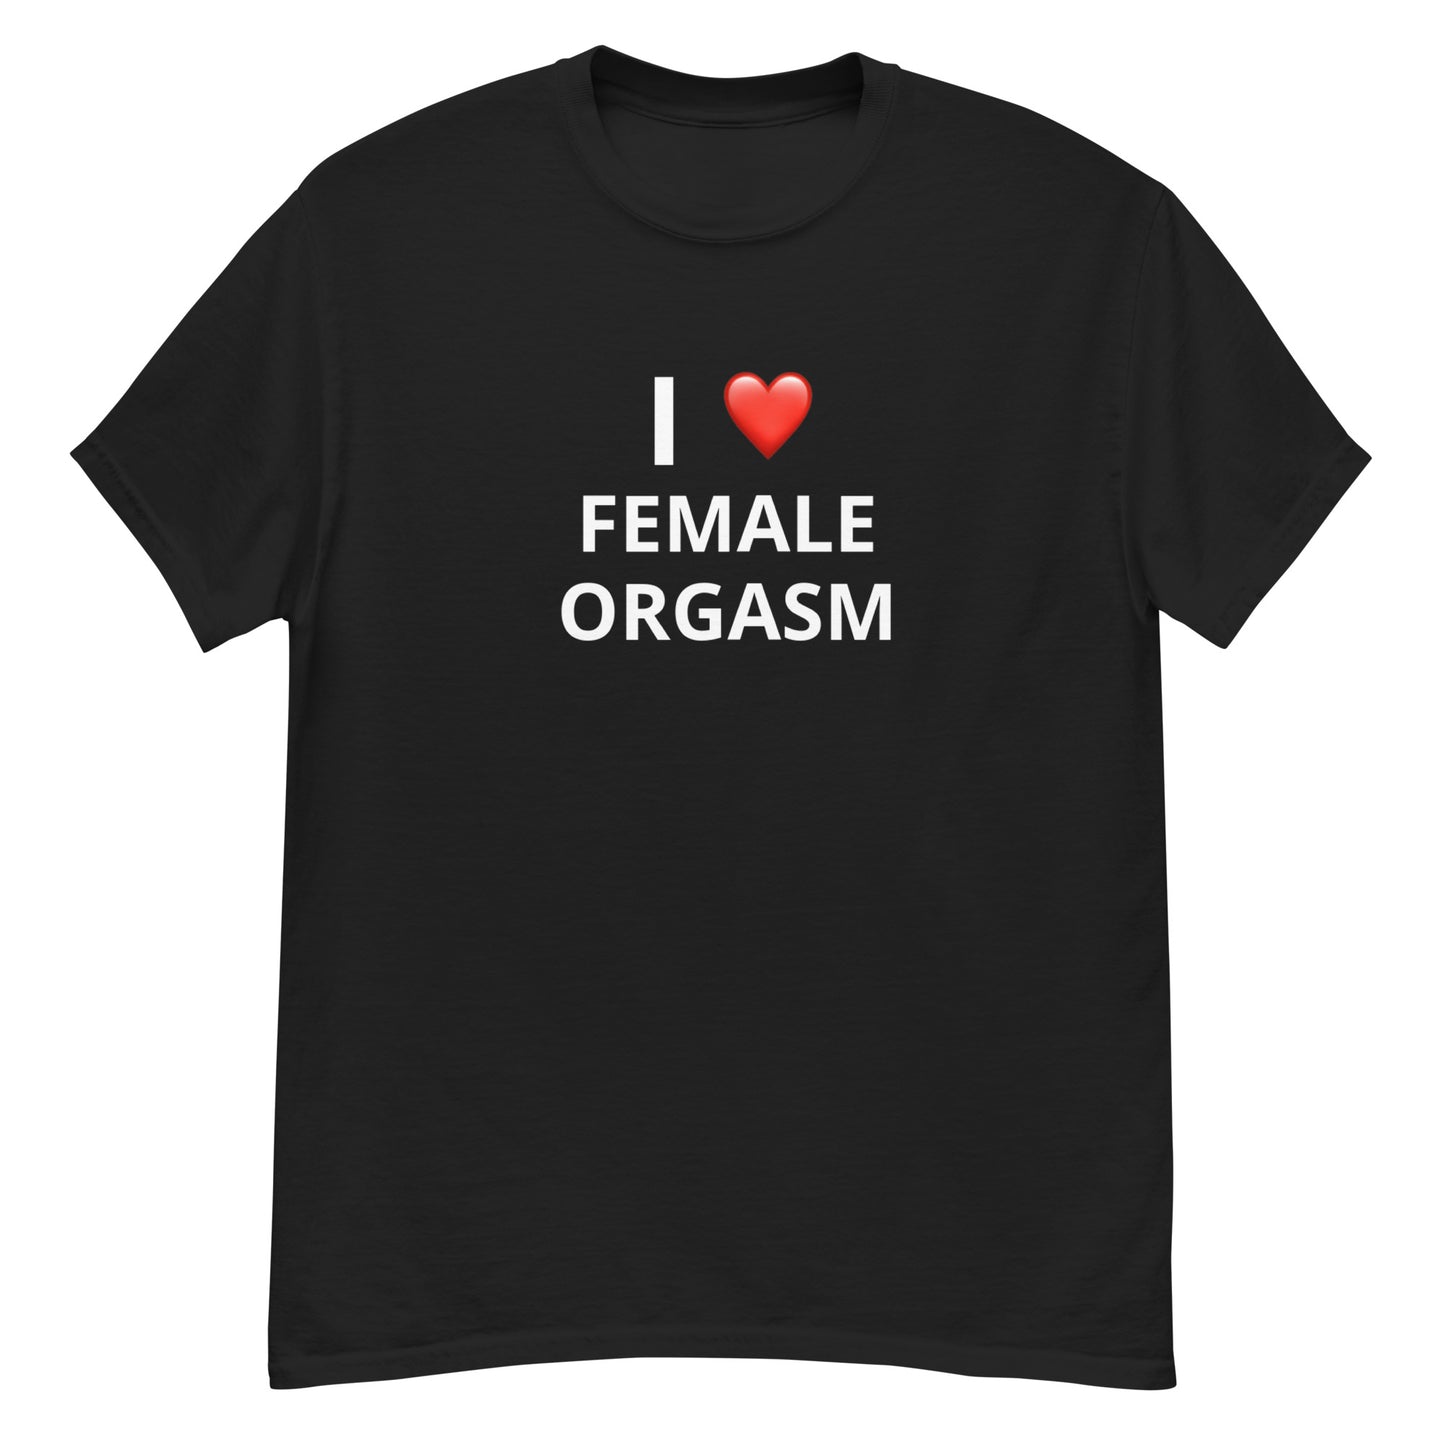 I LOVE FEMALE ORGASM